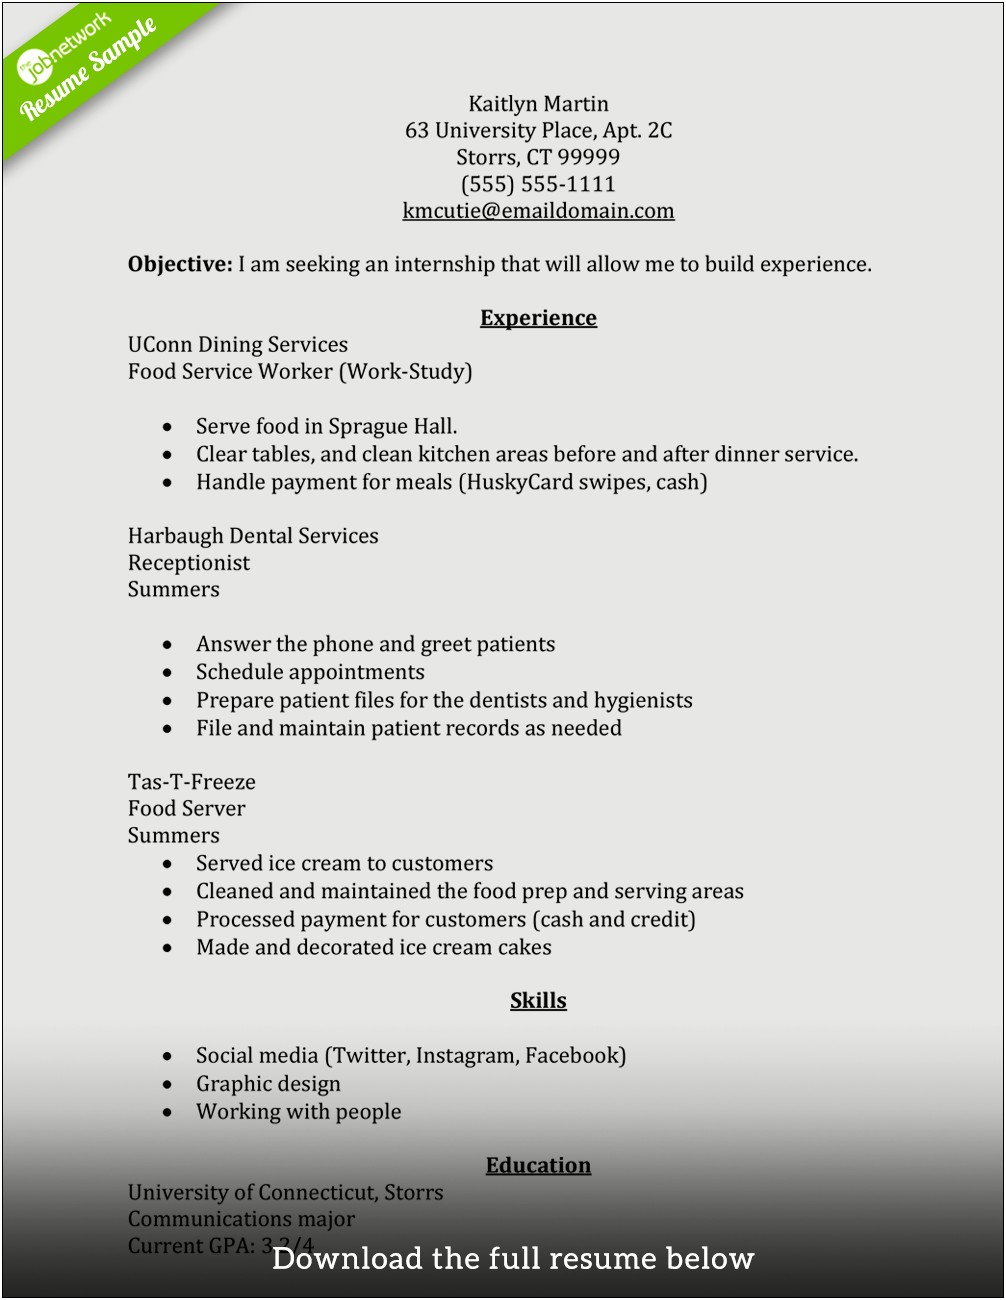 Resume For Medical Internship Sample